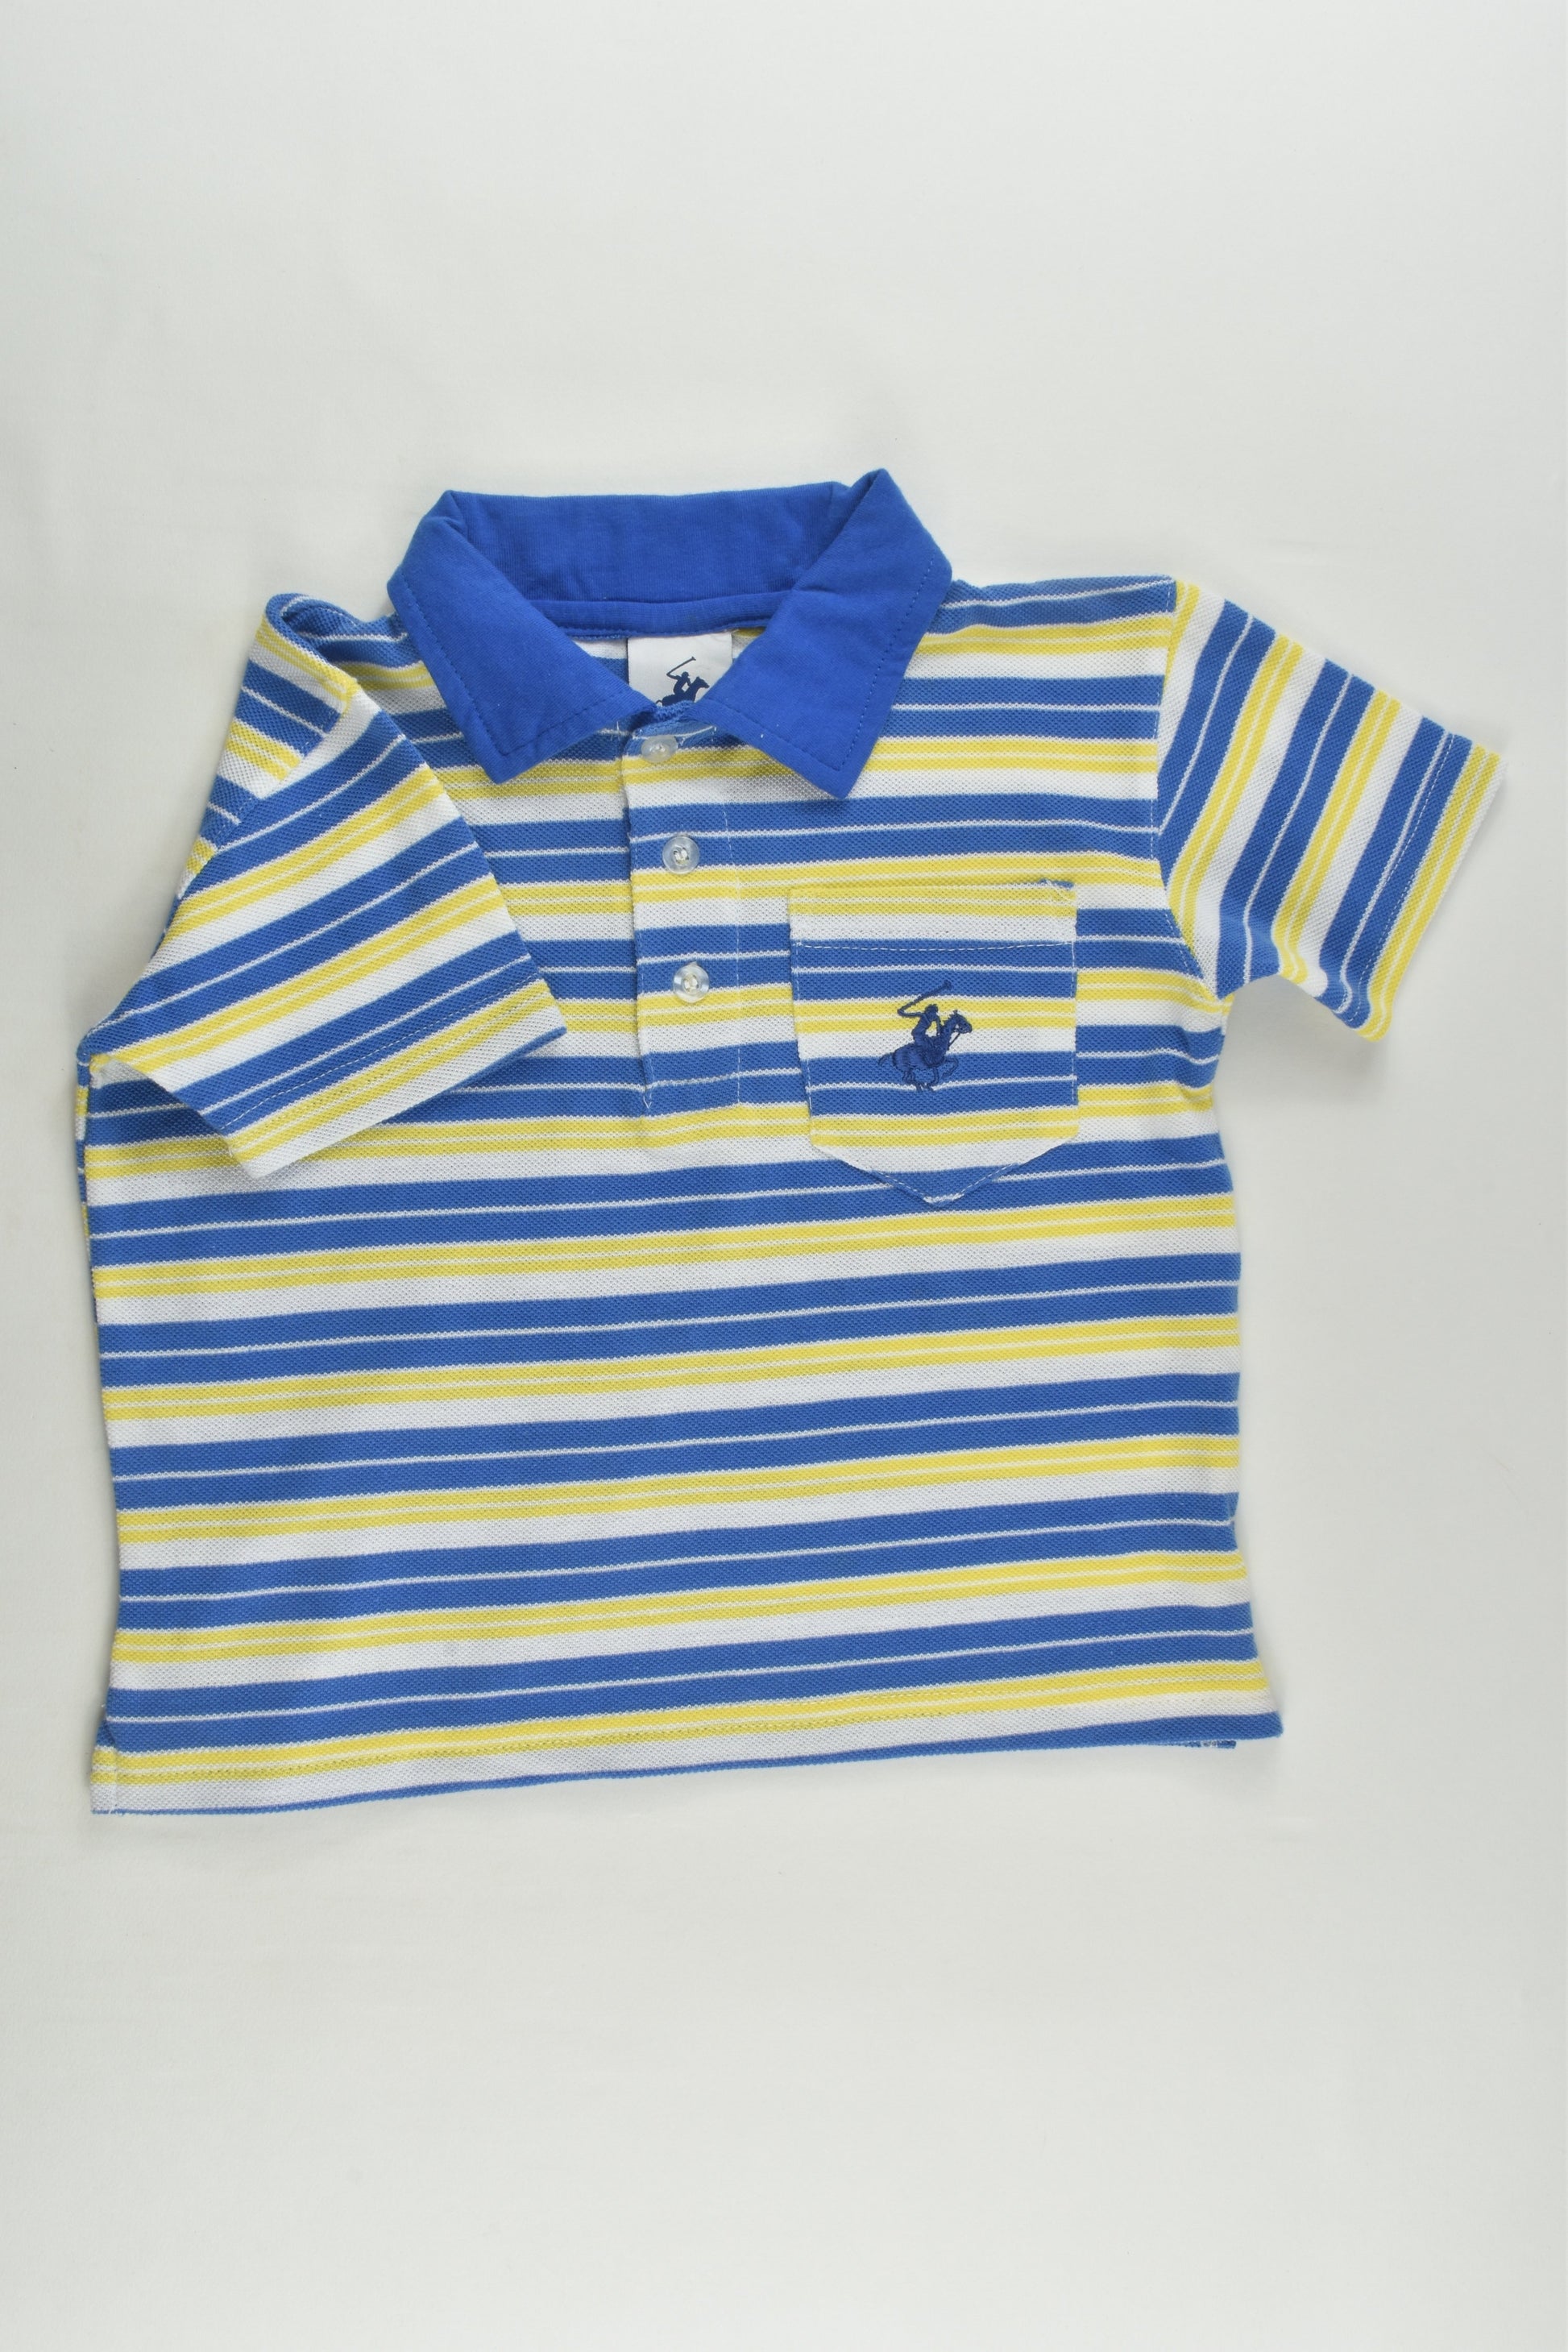 No Brand Size 3 Striped Polo Shirt